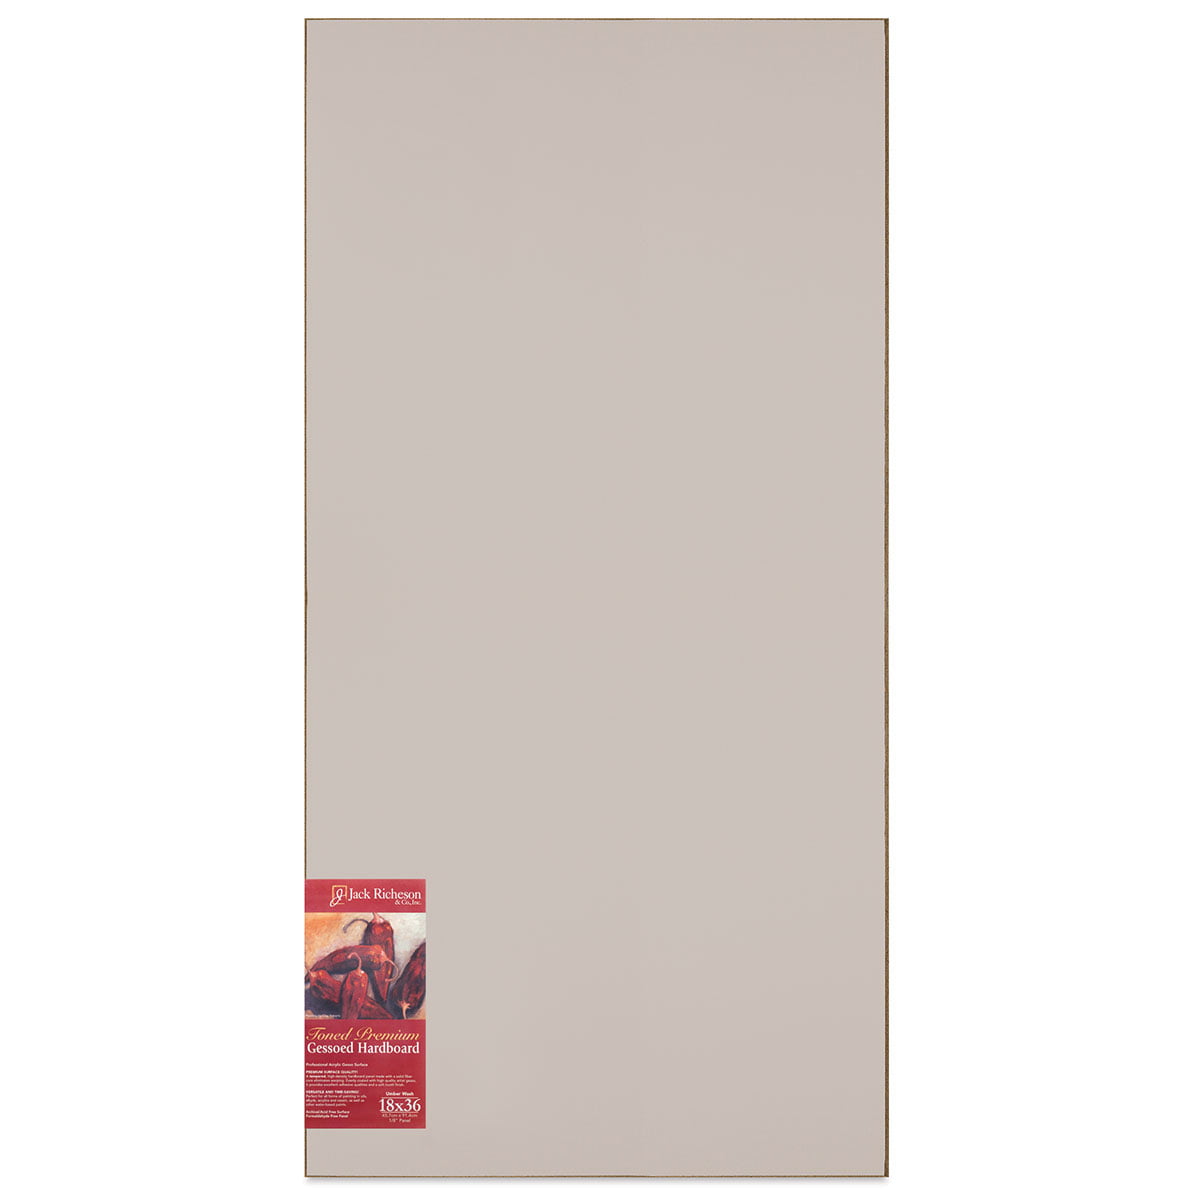 Richeson Toned Gesso Hardboard Panel - 18 x 36, Umber Wash 